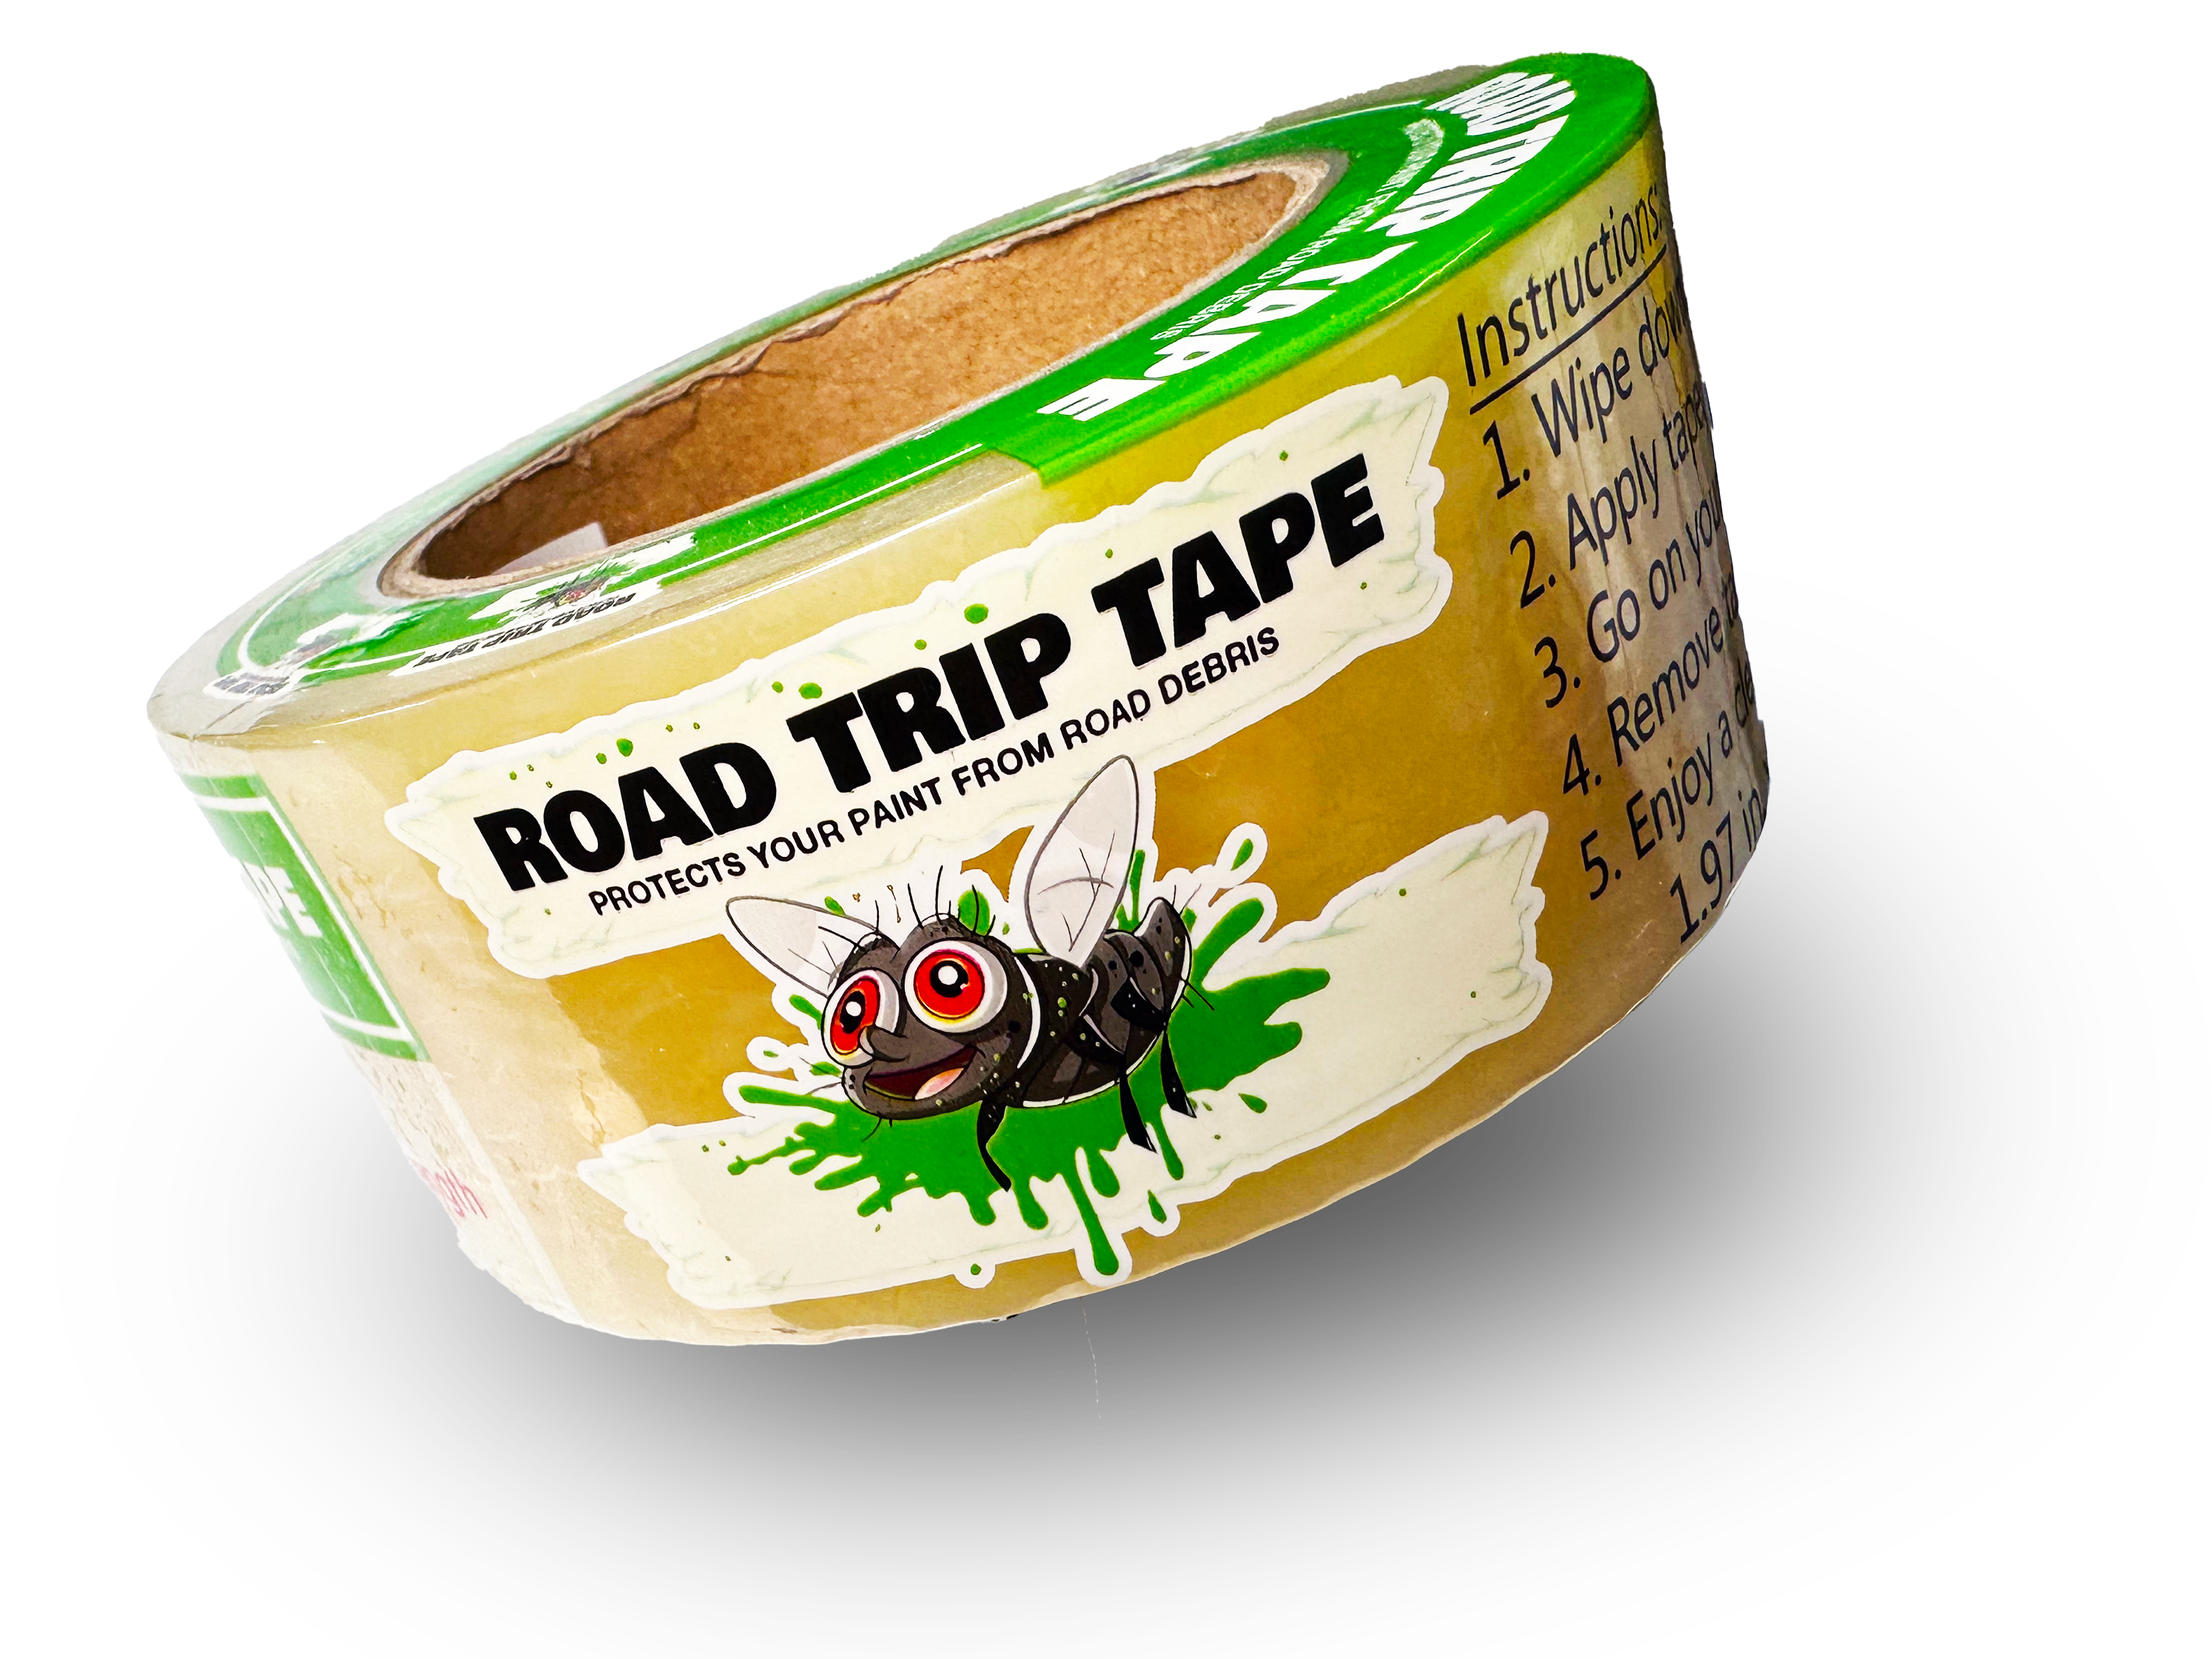 Road Trip Tape Single Roll